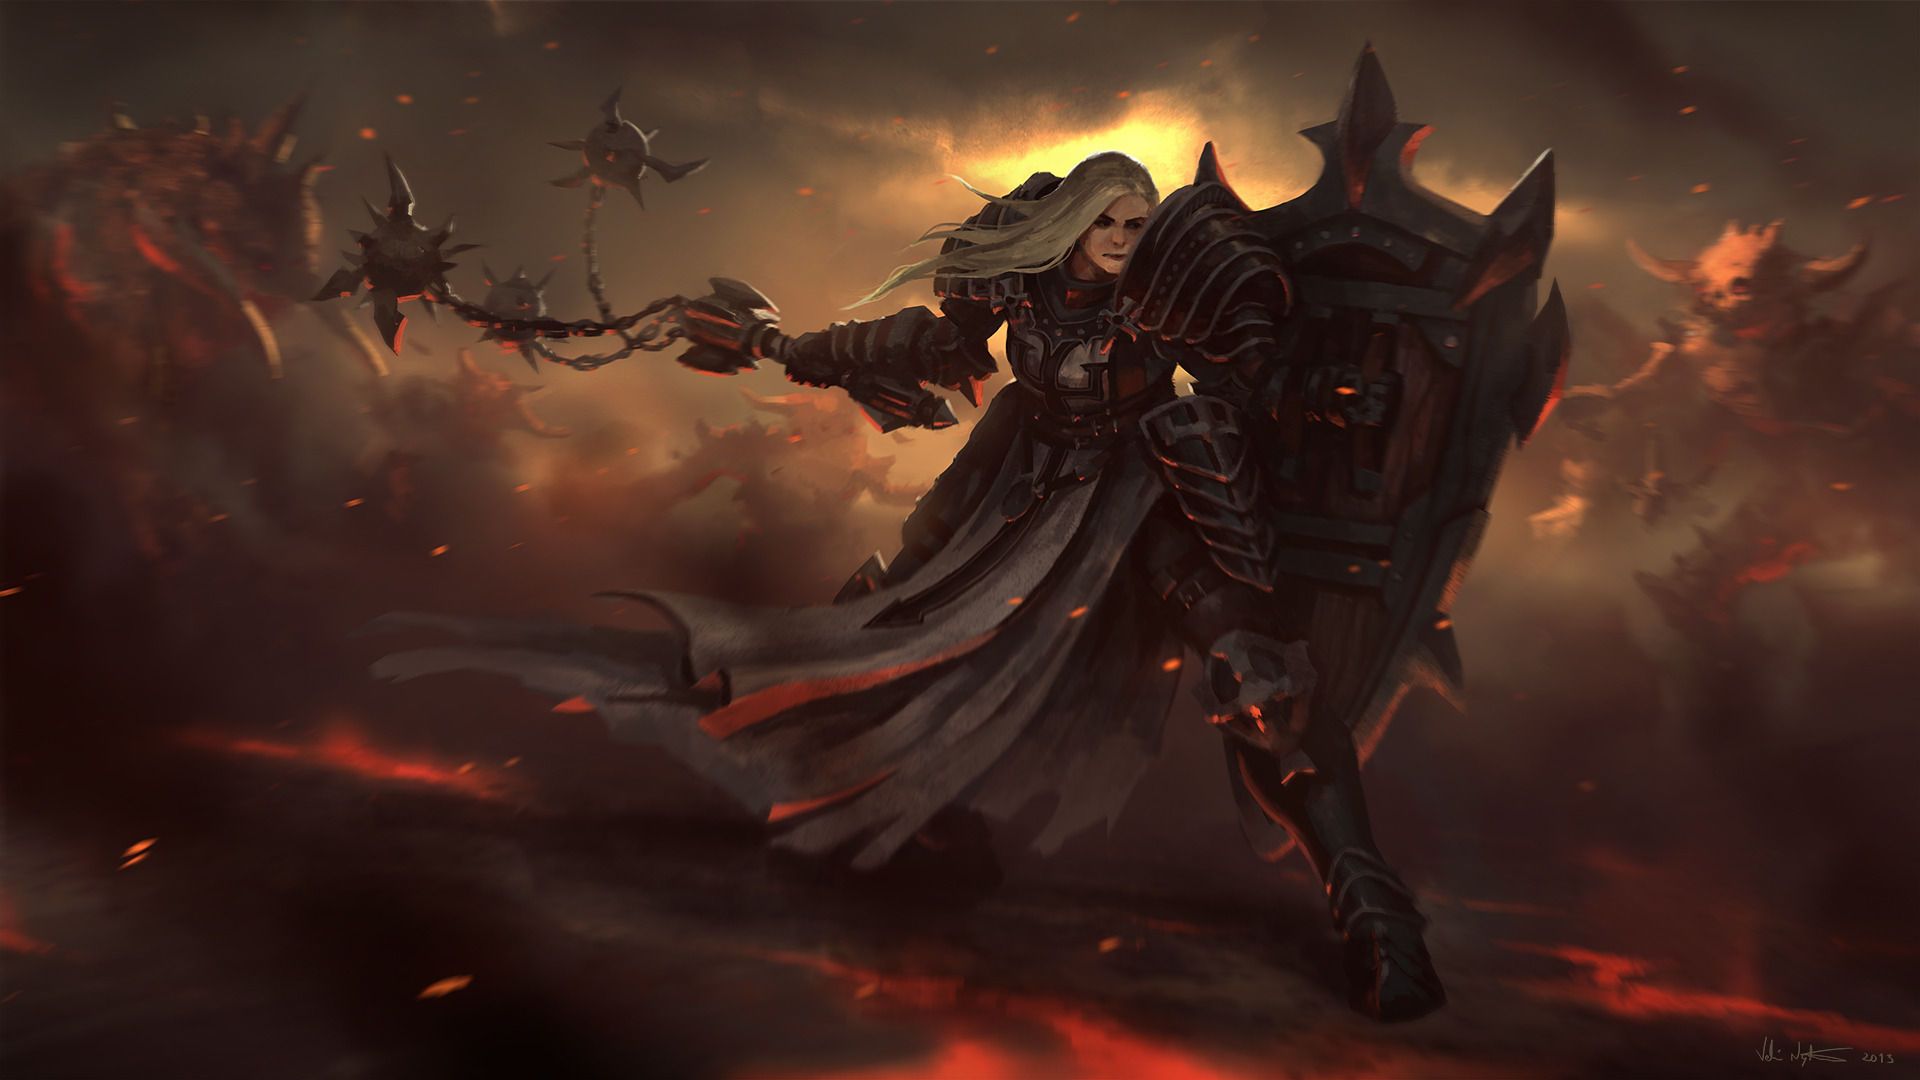 Diablo 3 Reaper OF Souls HD Desktop Wallpapers And Images | Cool ...